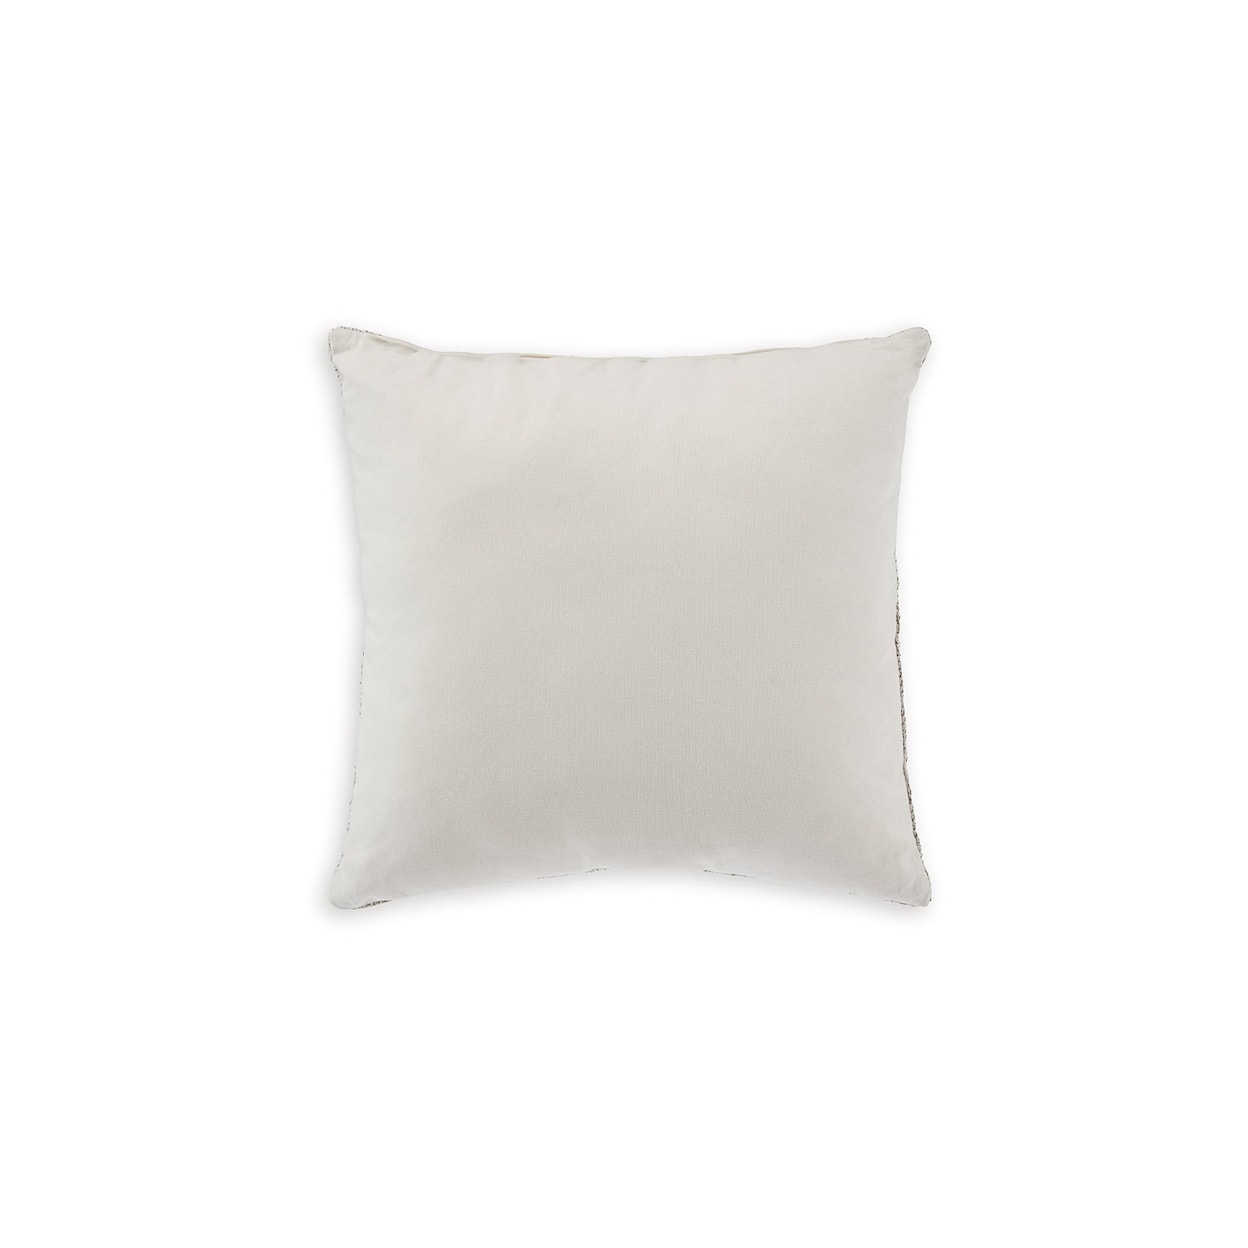 Signature Design Carddon Pillow